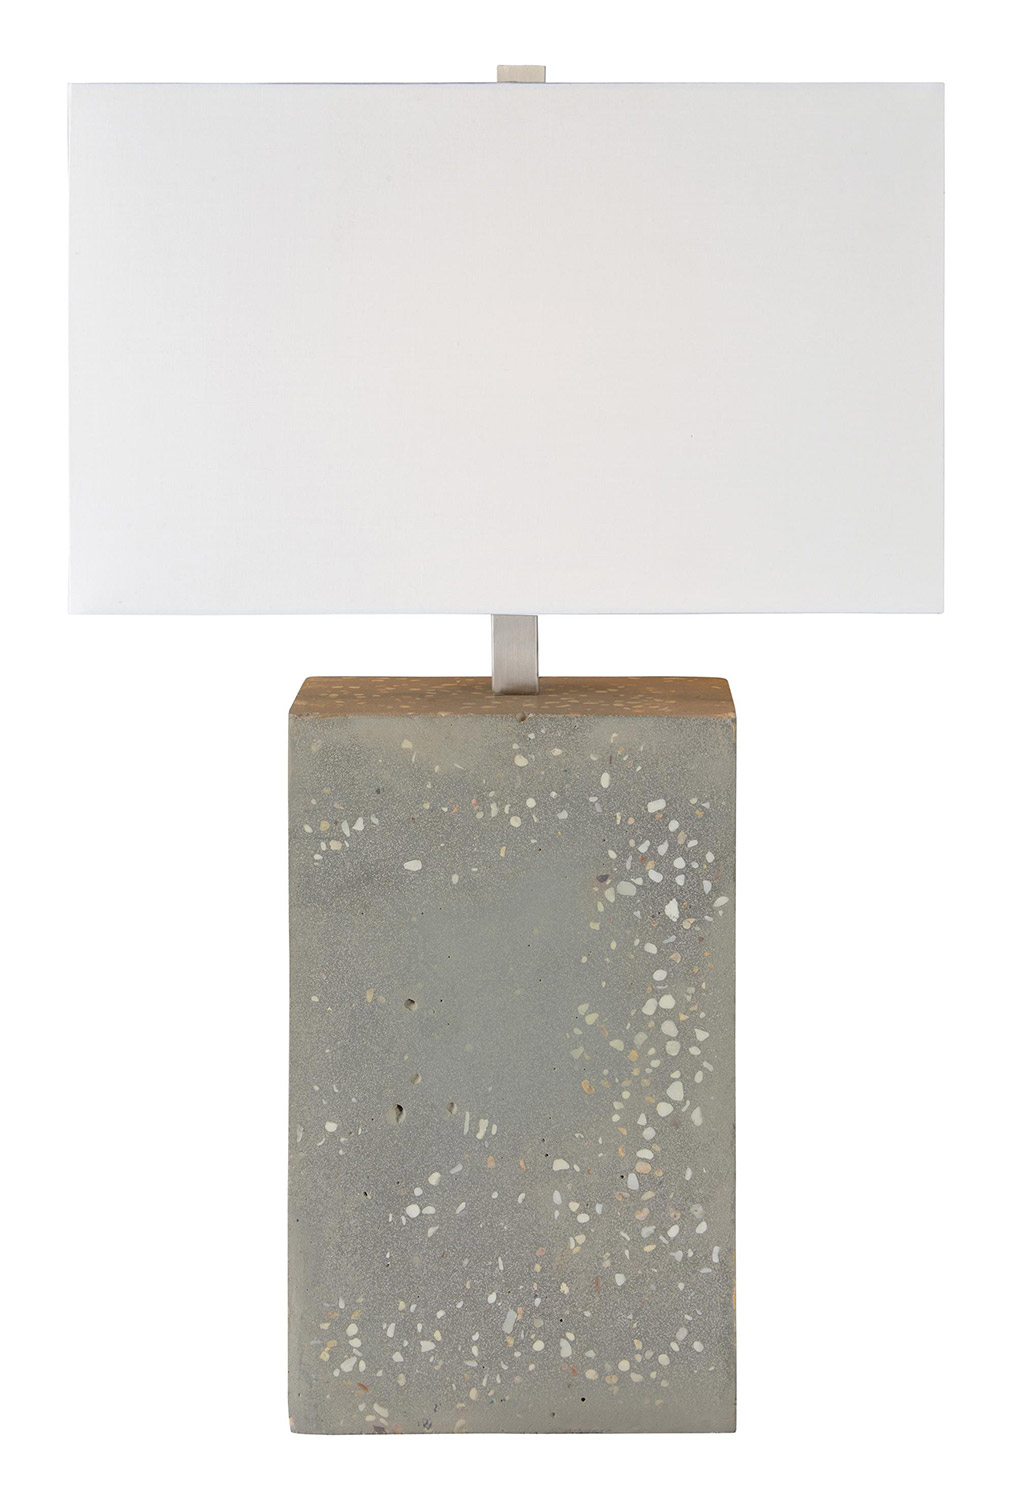 Ren-Wil Dauphin Table Lamp - Concrete